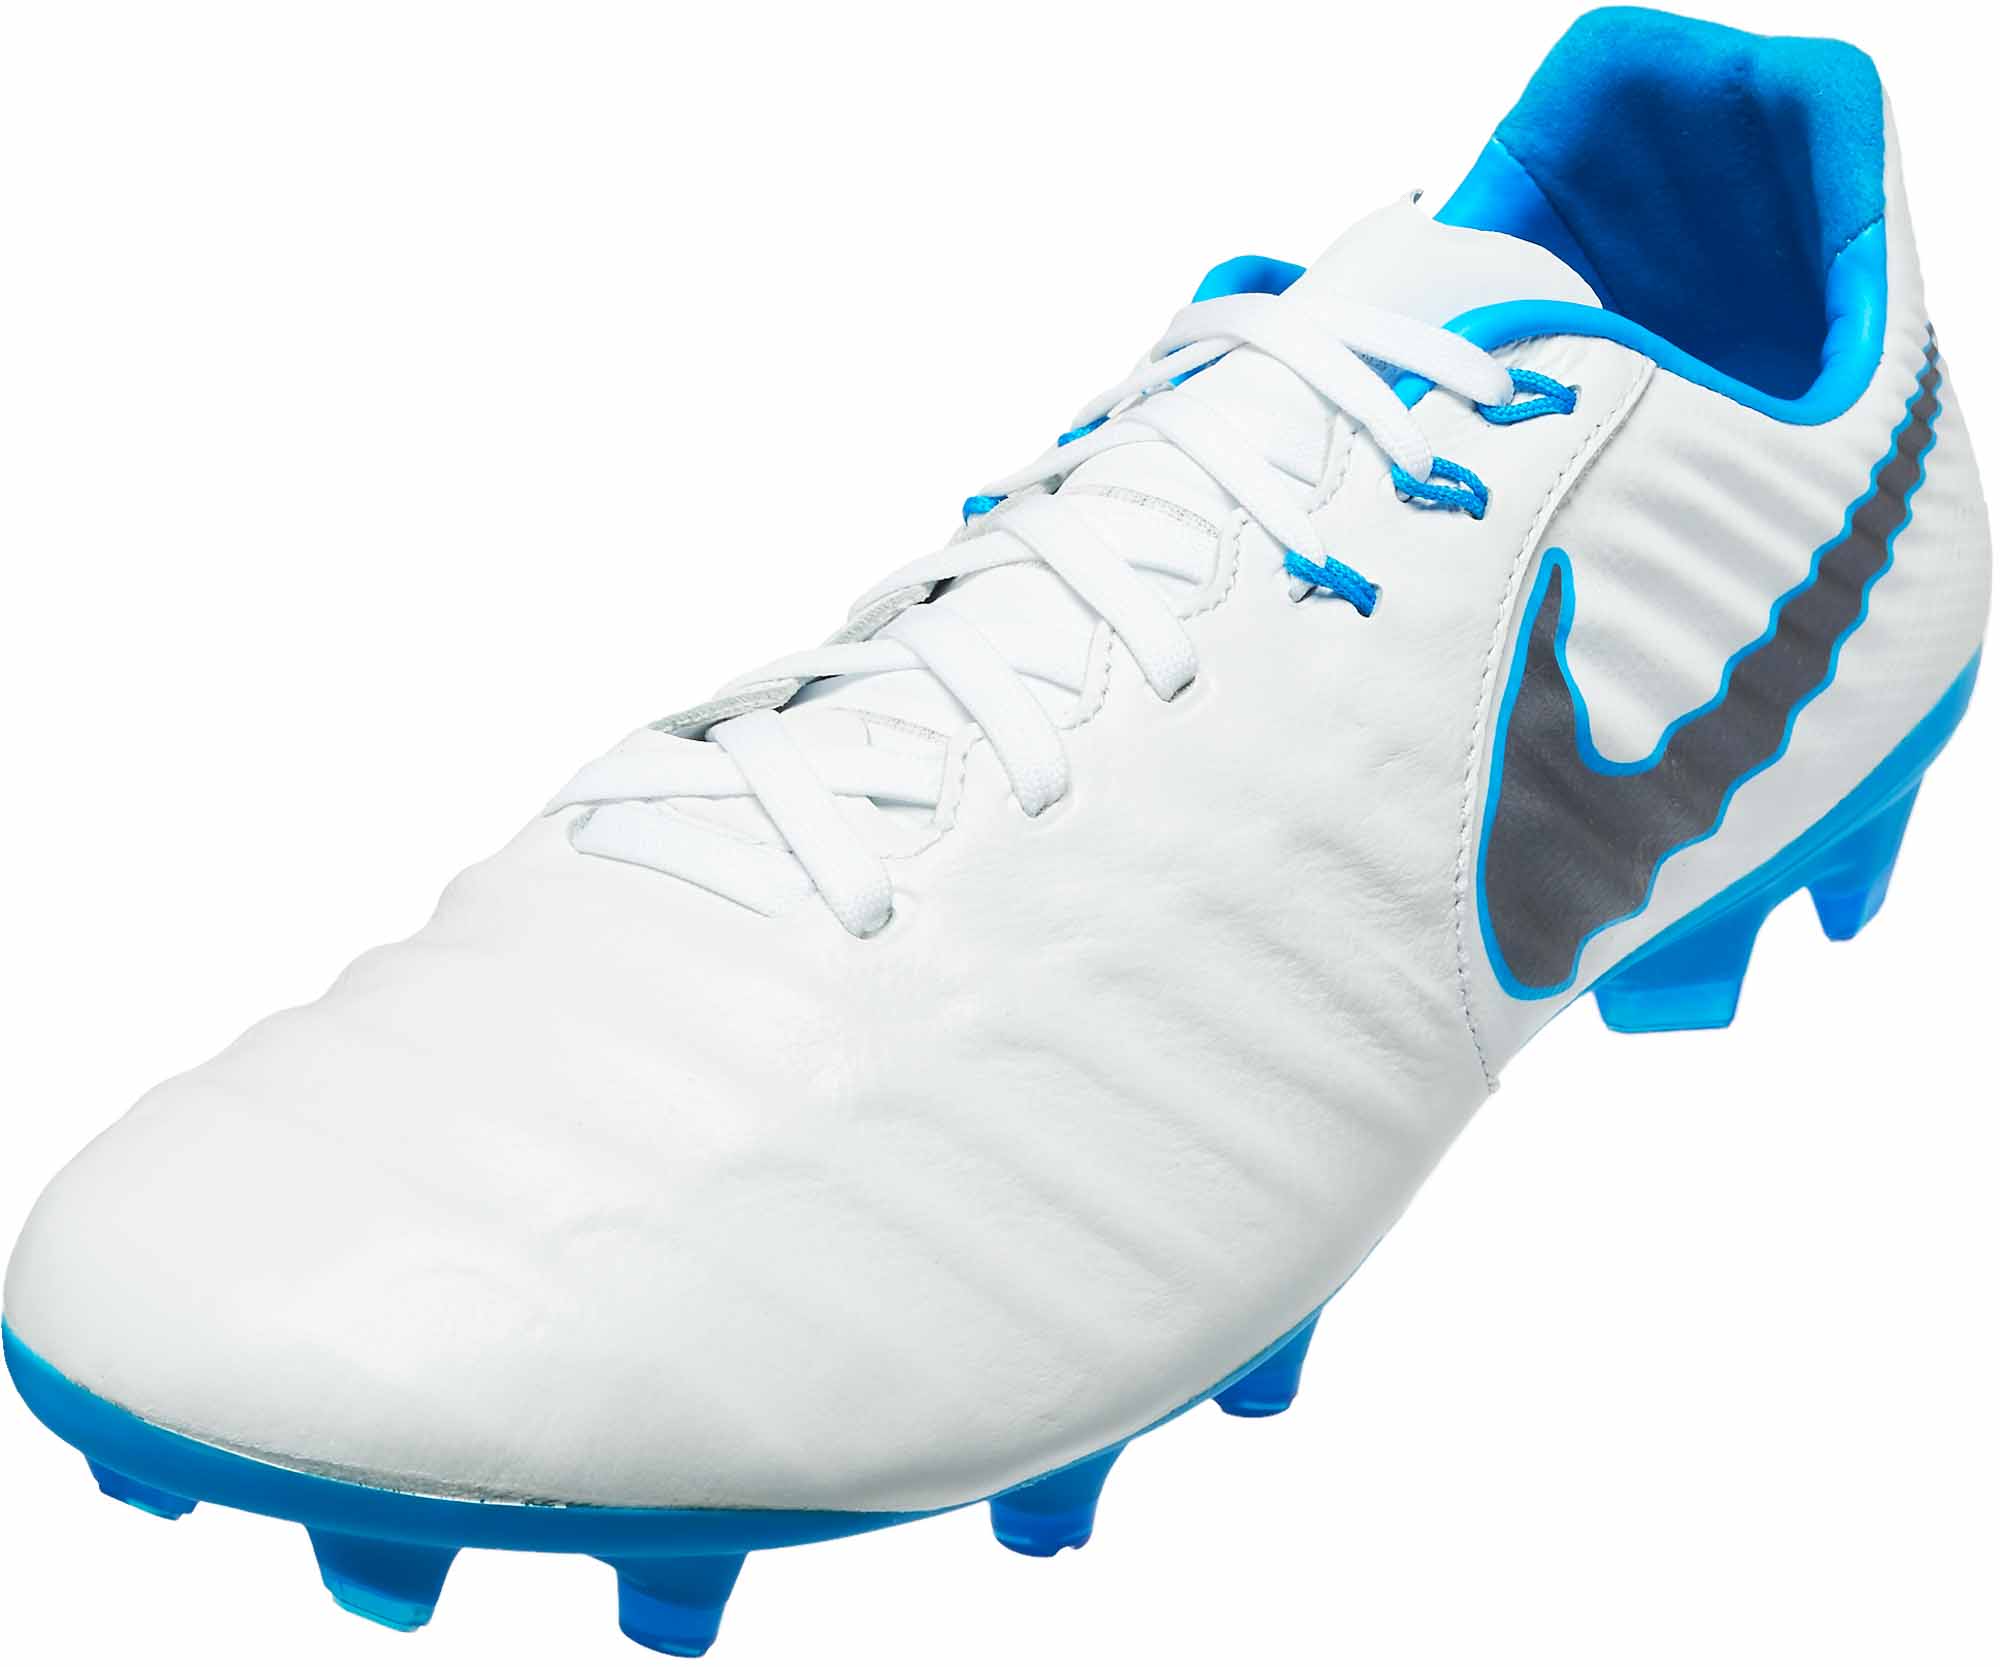 Nike Tiempo Legend VII Pro FG - White/Metallic Grey/Blue - SoccerPro